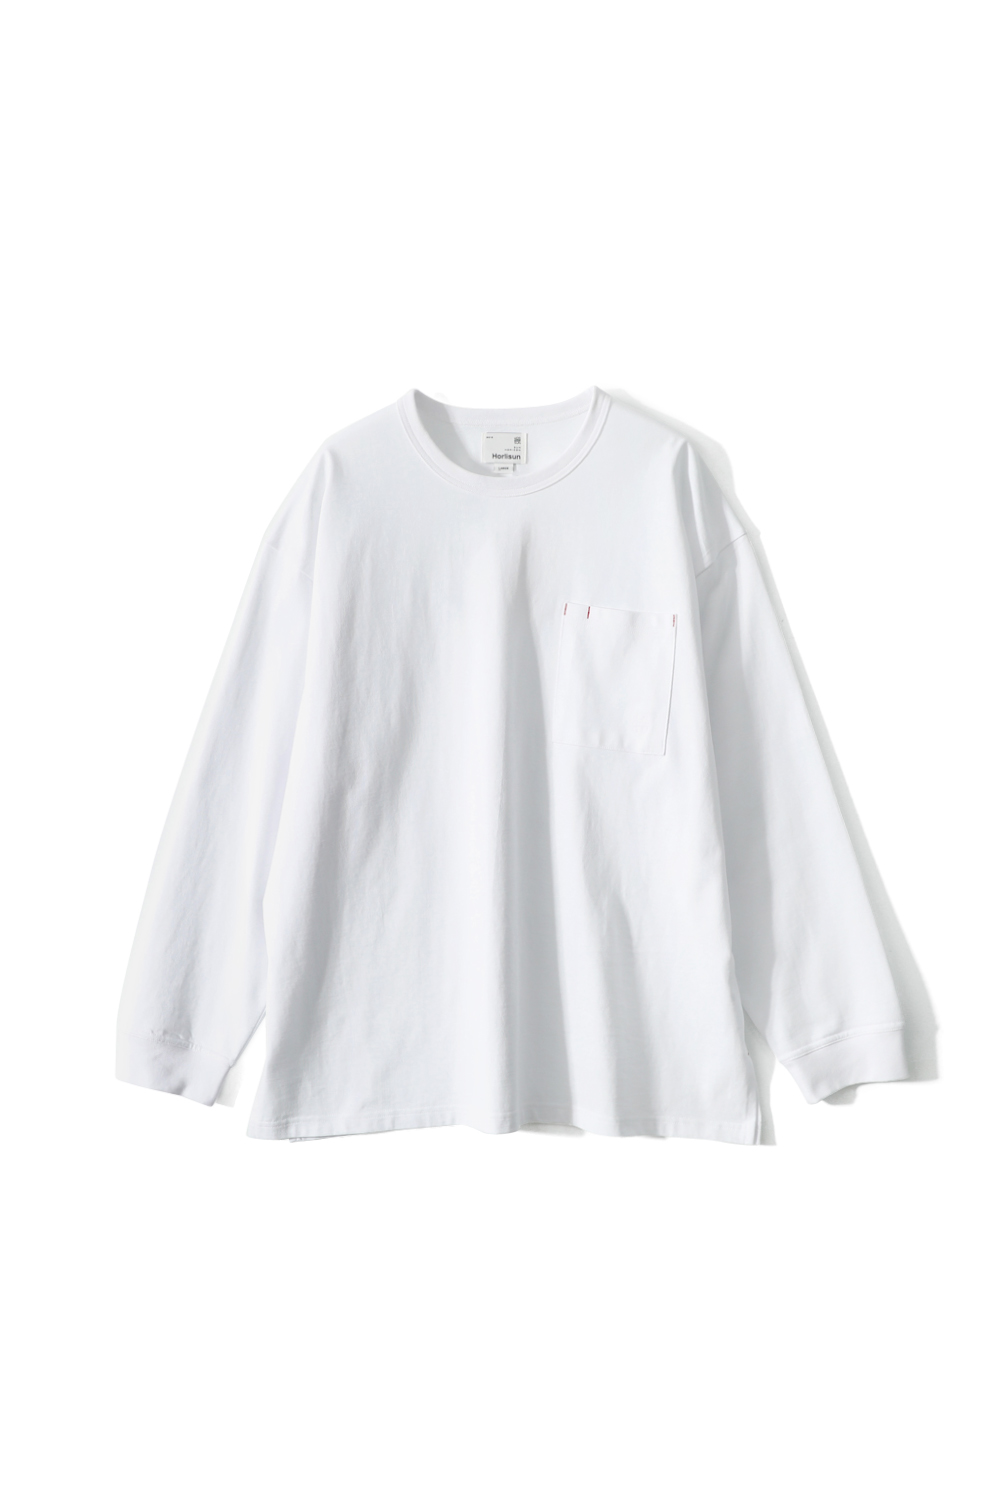 Lawrence Long Sleeve T-shirt White